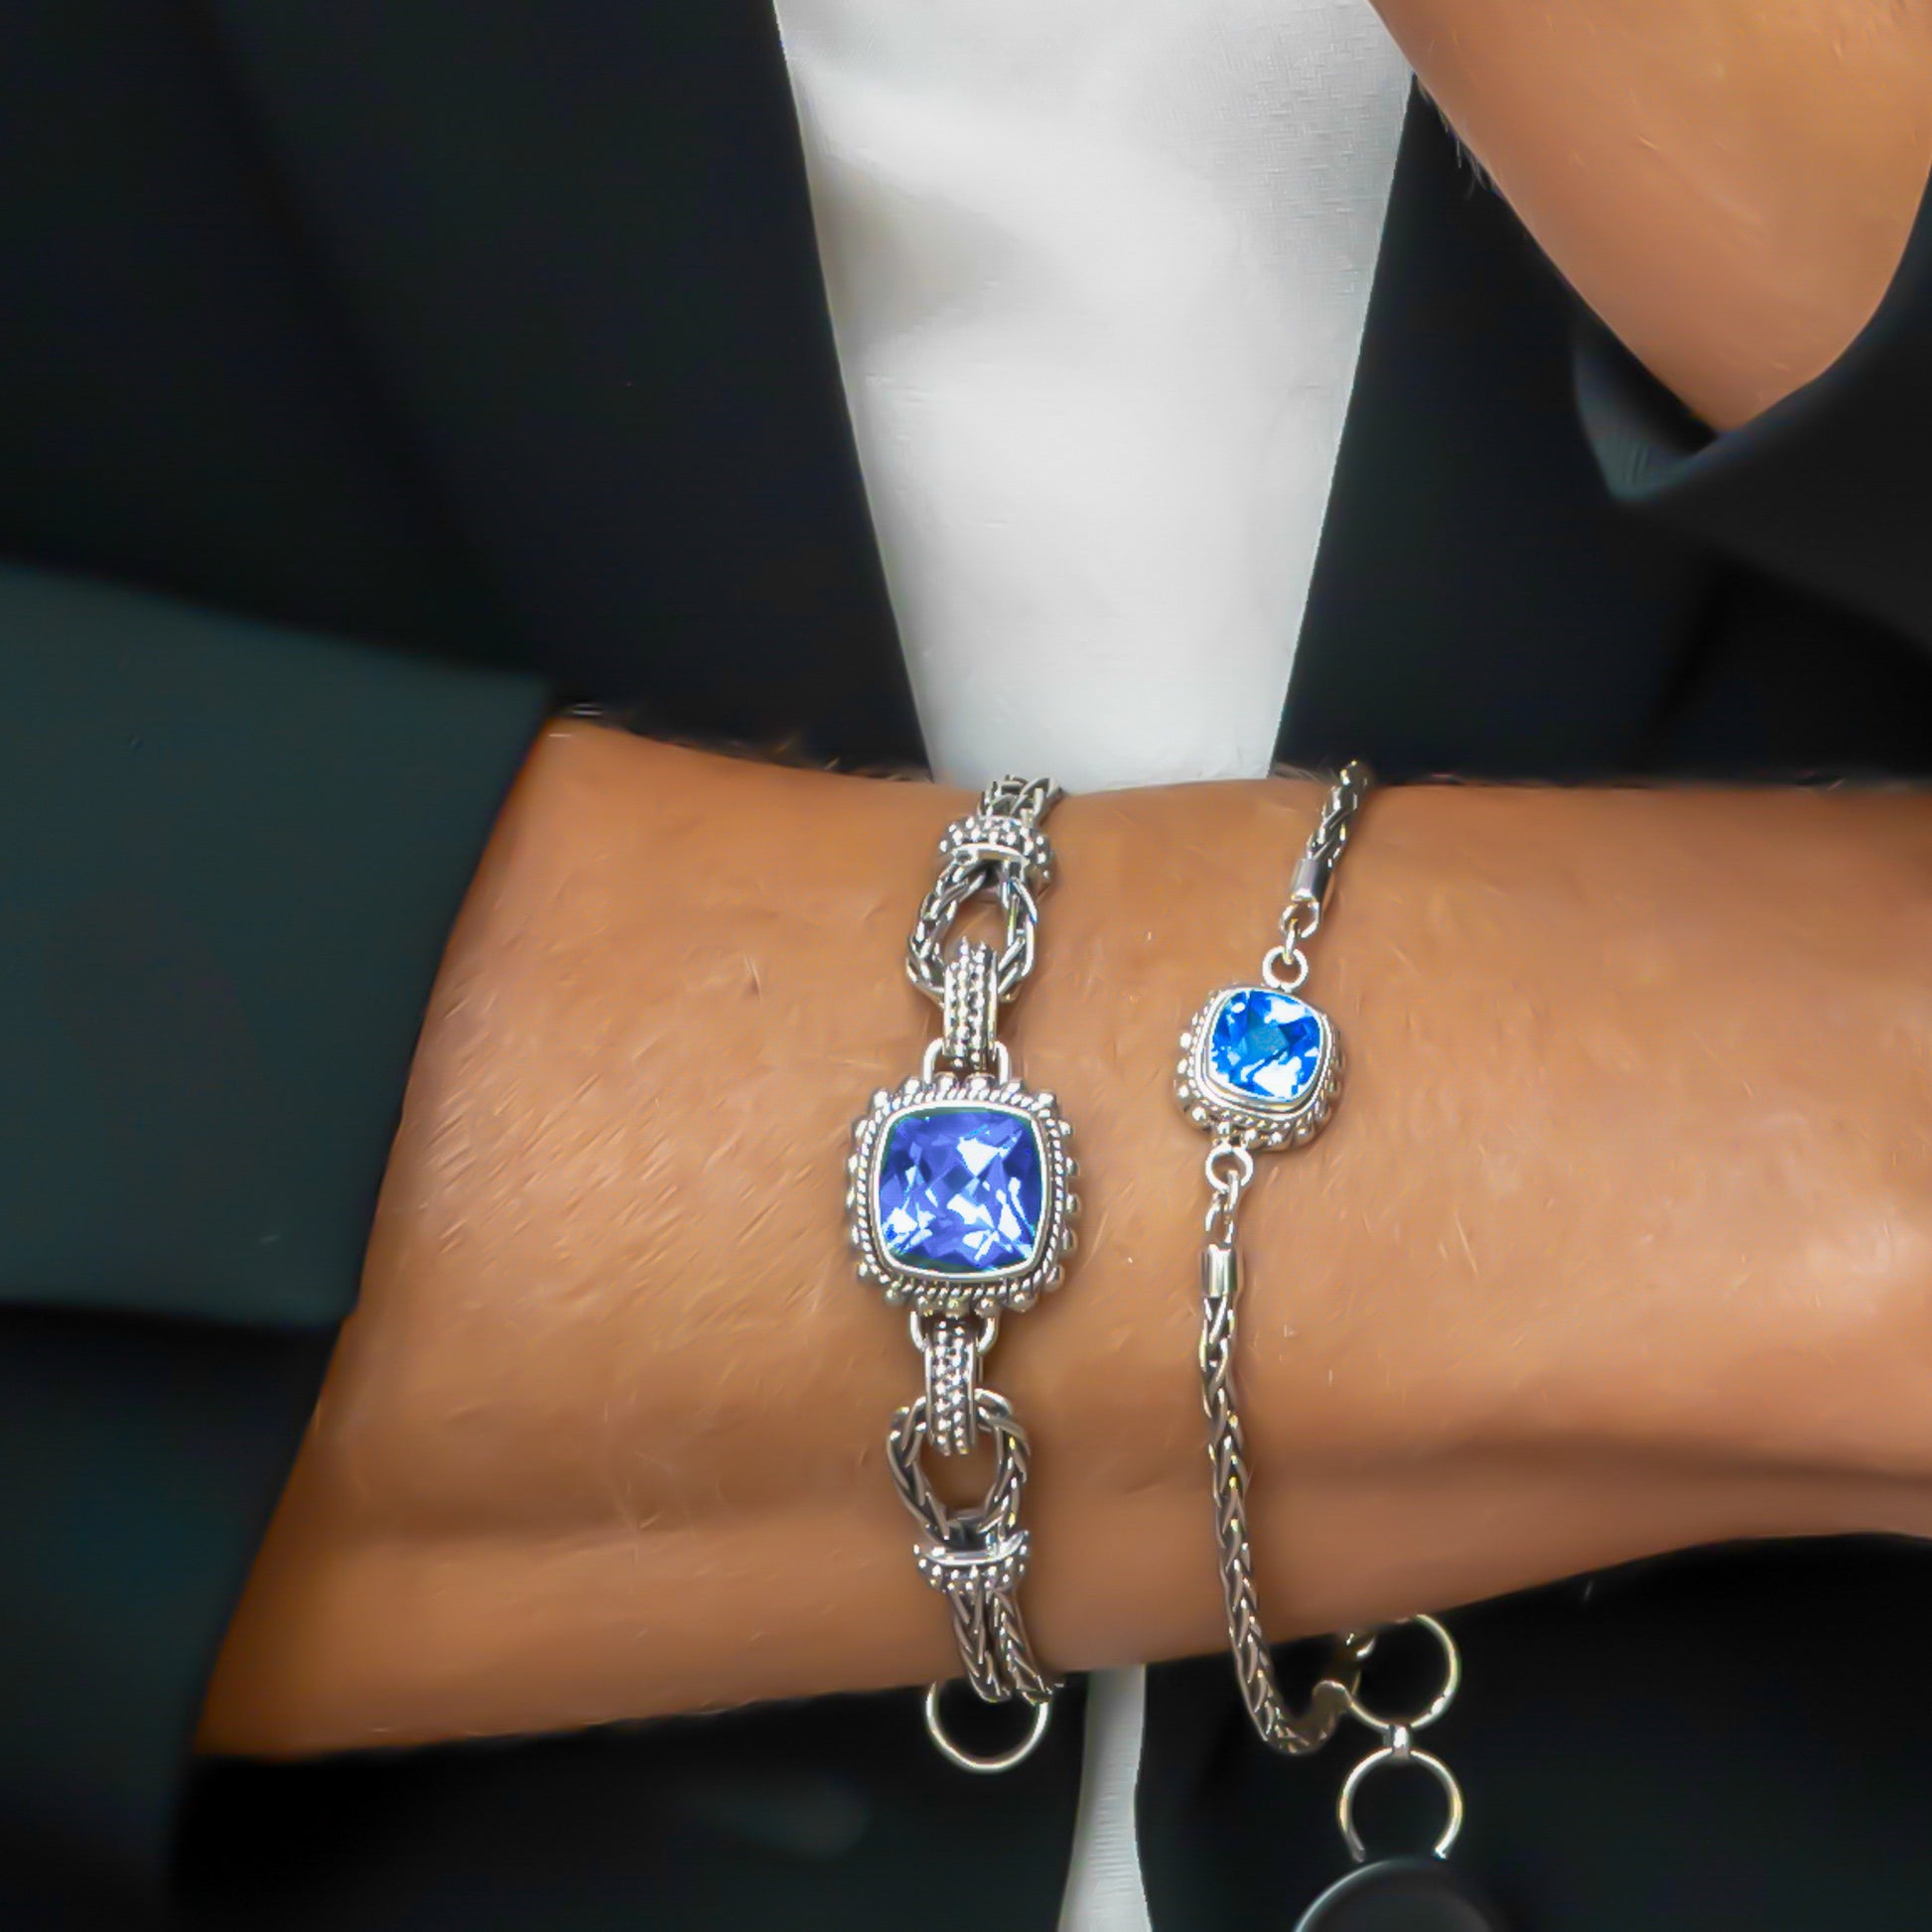 Woman's arm wearing two different sized blue topaz bracelets.